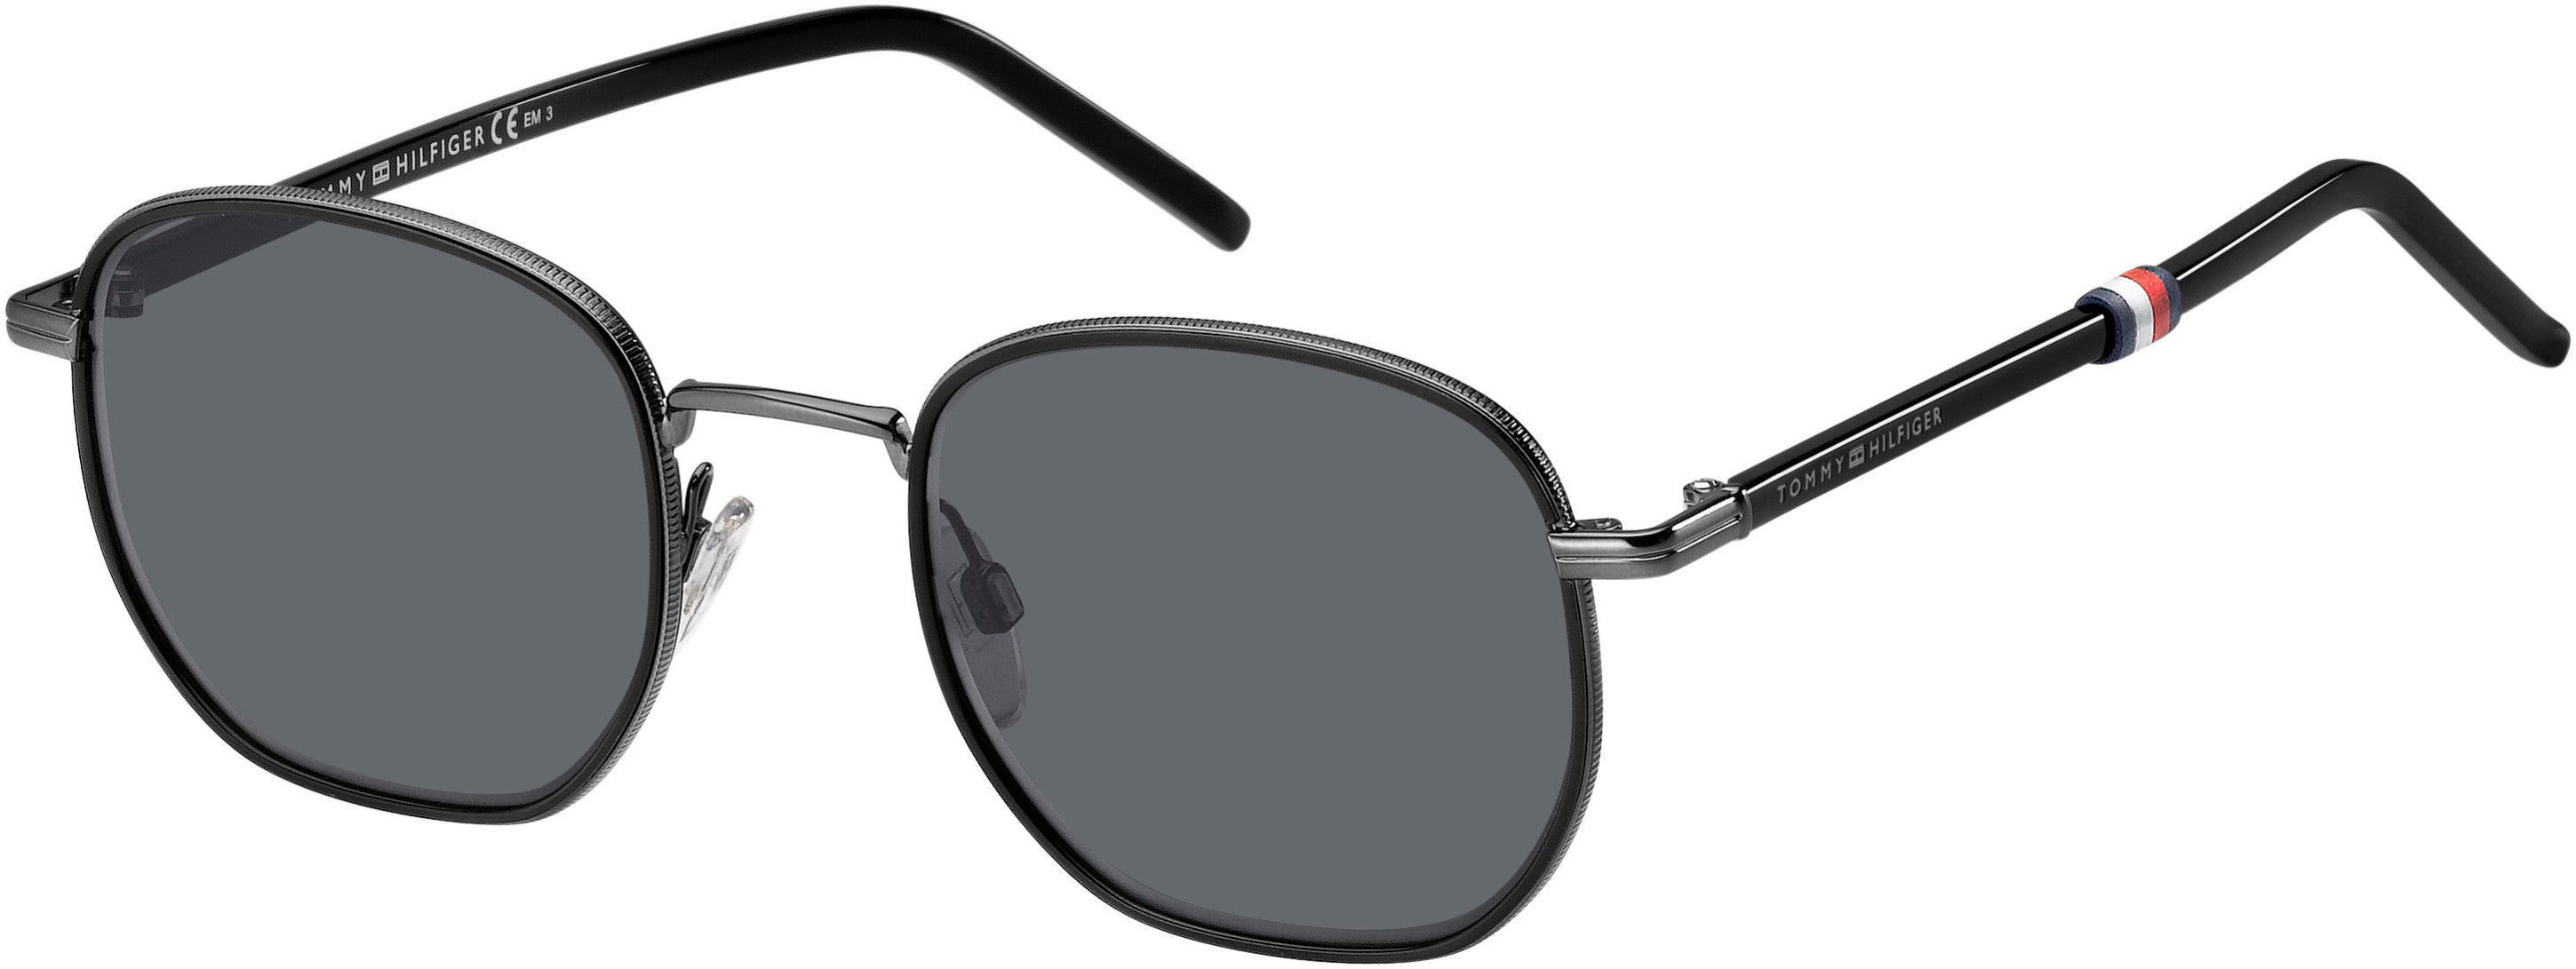 Tommy Hilfiger T. Hilfiger 1672/S Rectangular Sunglasses 0V81-0V81  Dark Ruthenium Black (IR Gray)